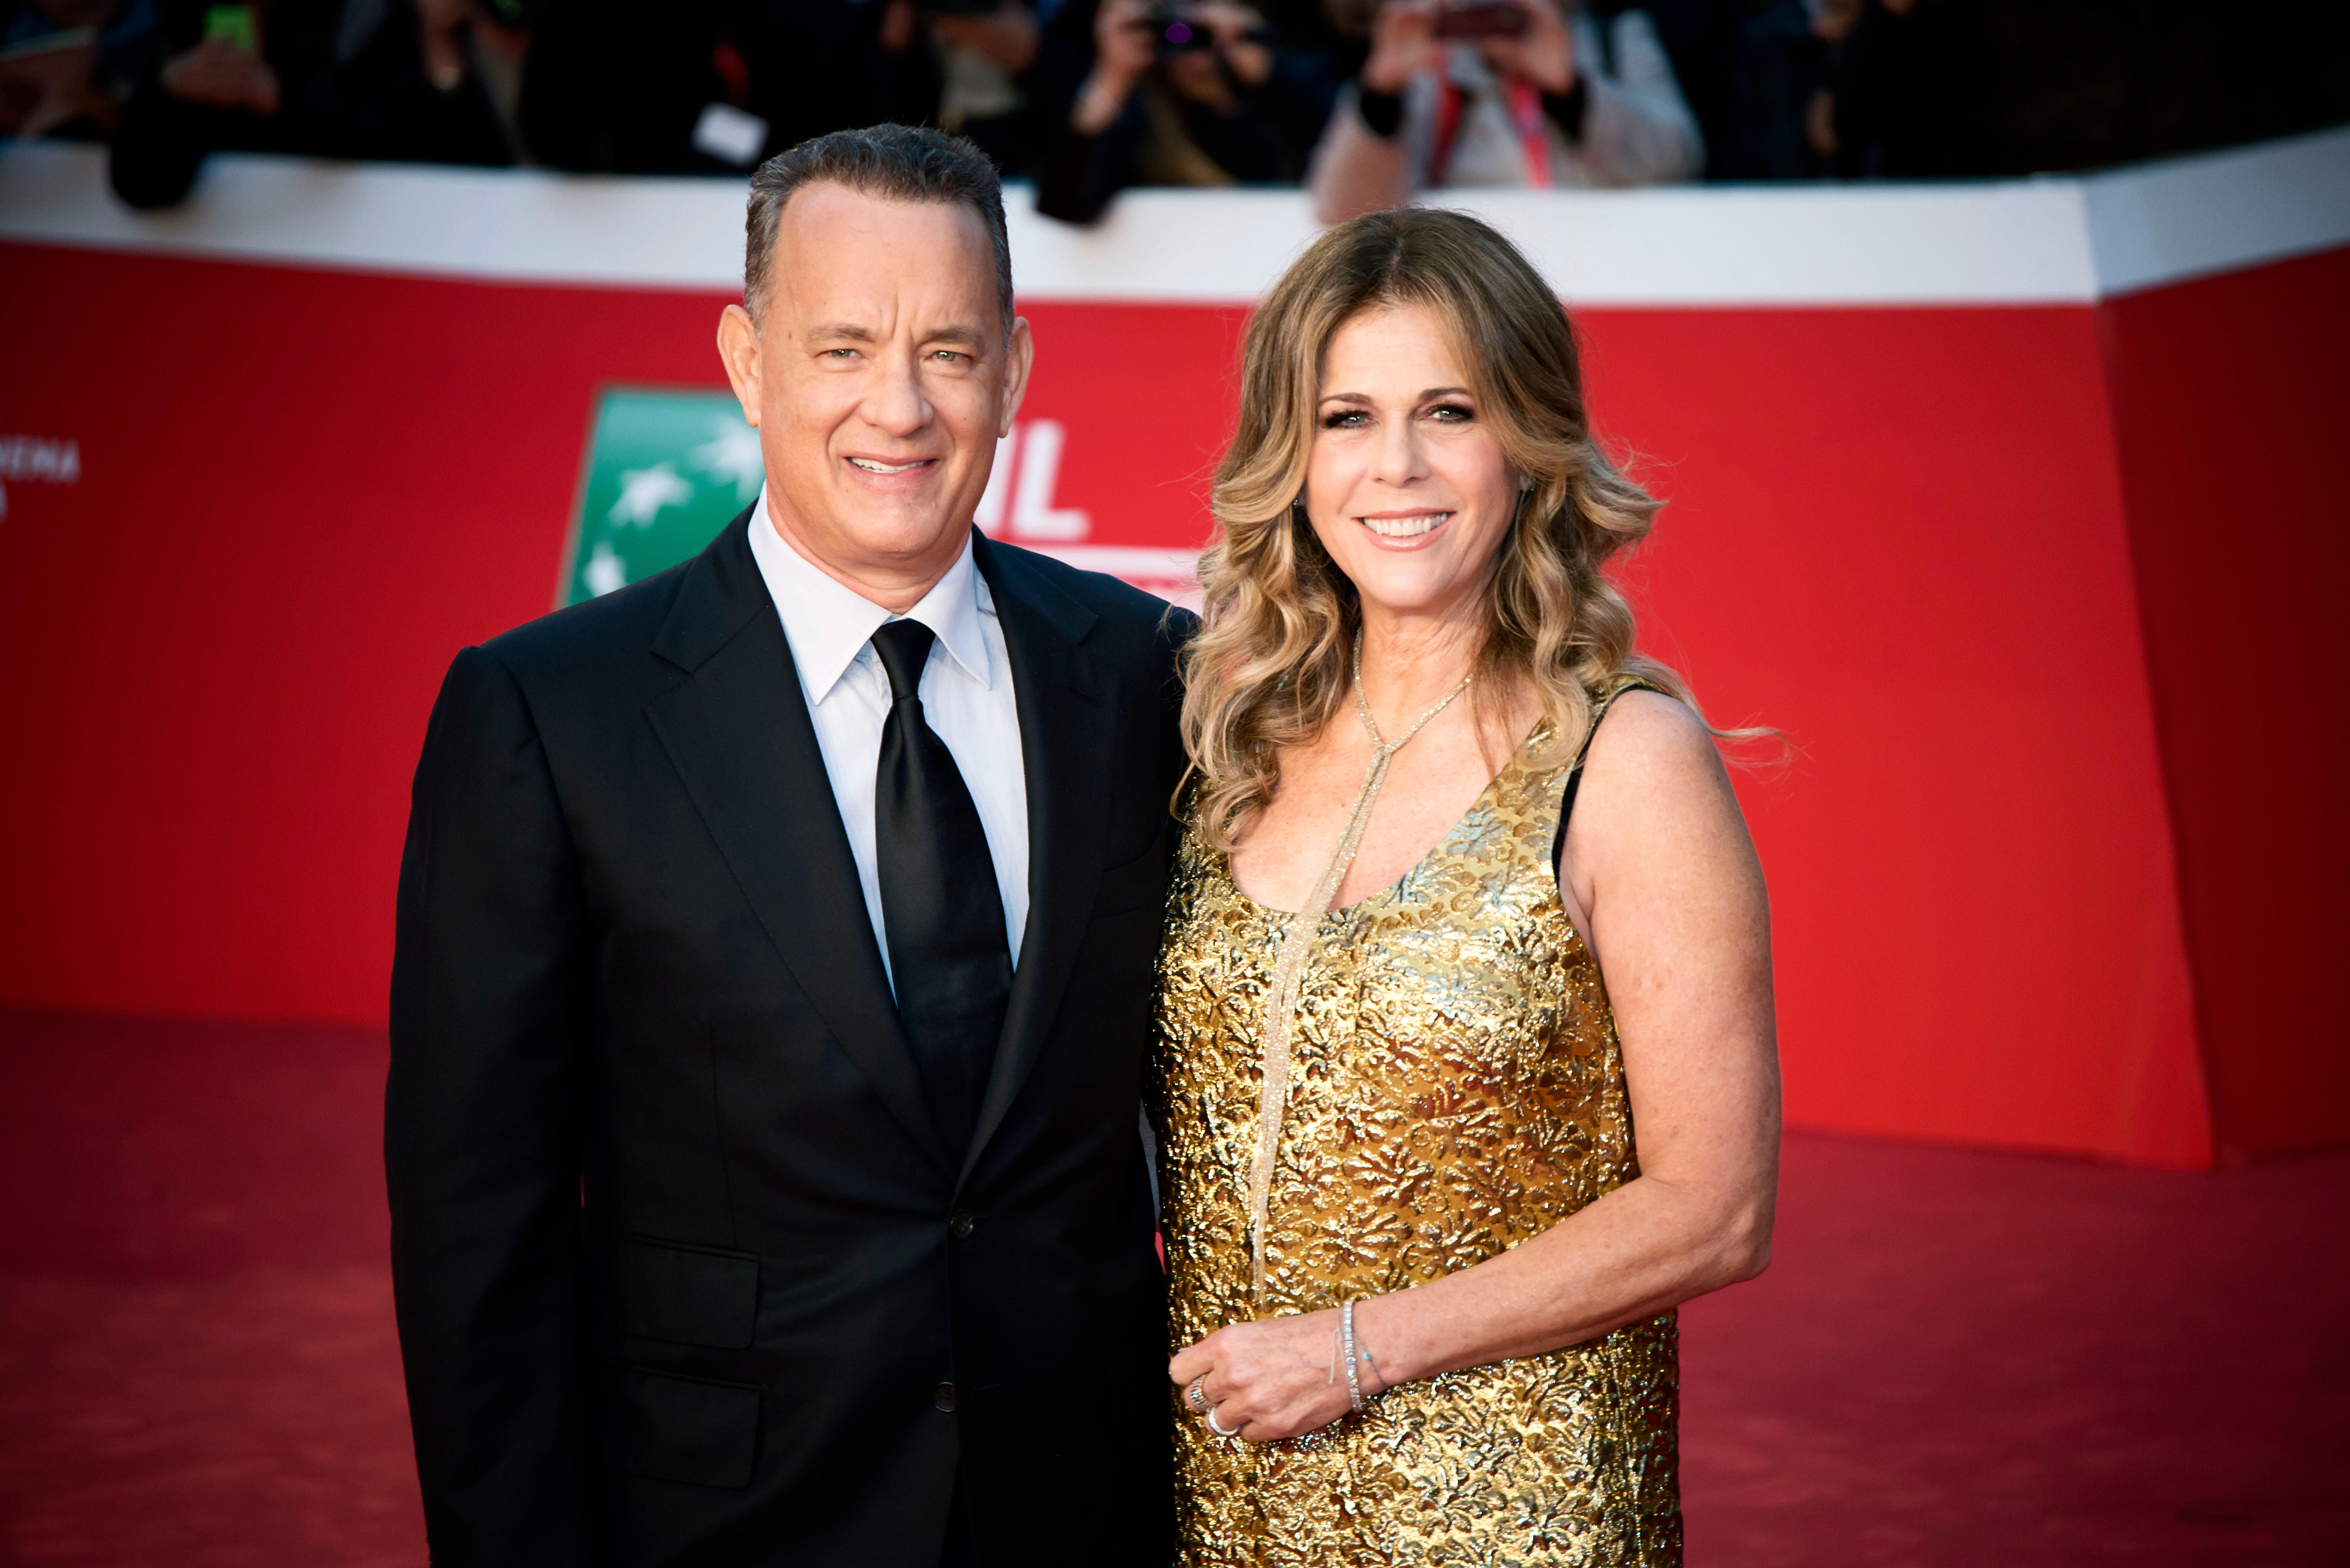 Tom Hanks and Rita Wilson smiling at the camera